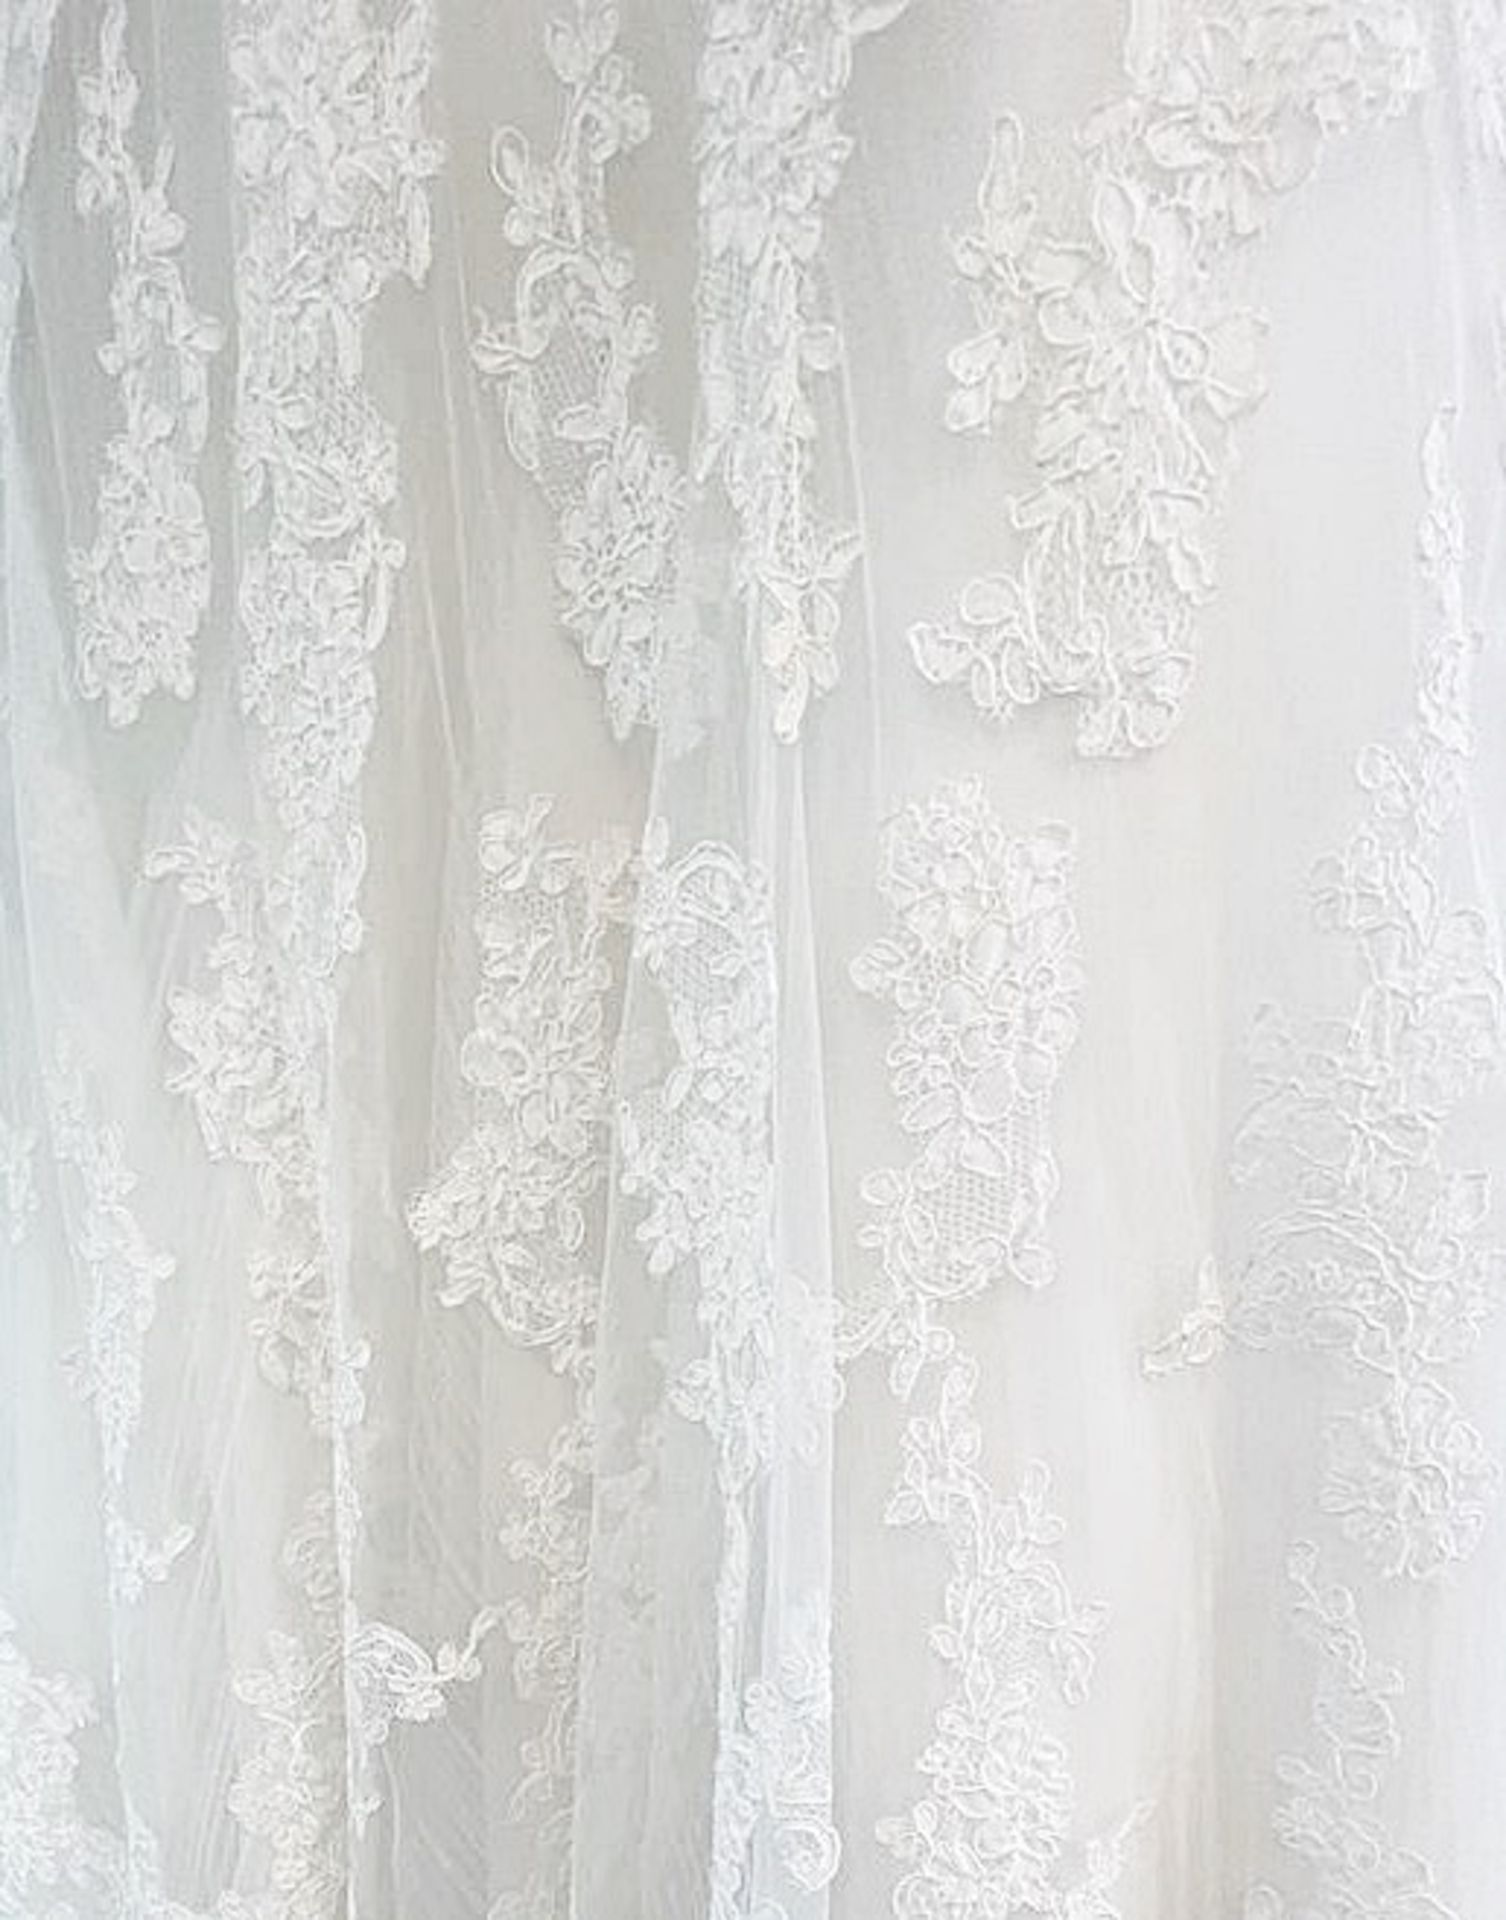 1 x PRONOVIAS 'Olugul' Strapless Mermaid Designer Wedding Dress Bridal Gown - Colour: Ivory - Image 2 of 10